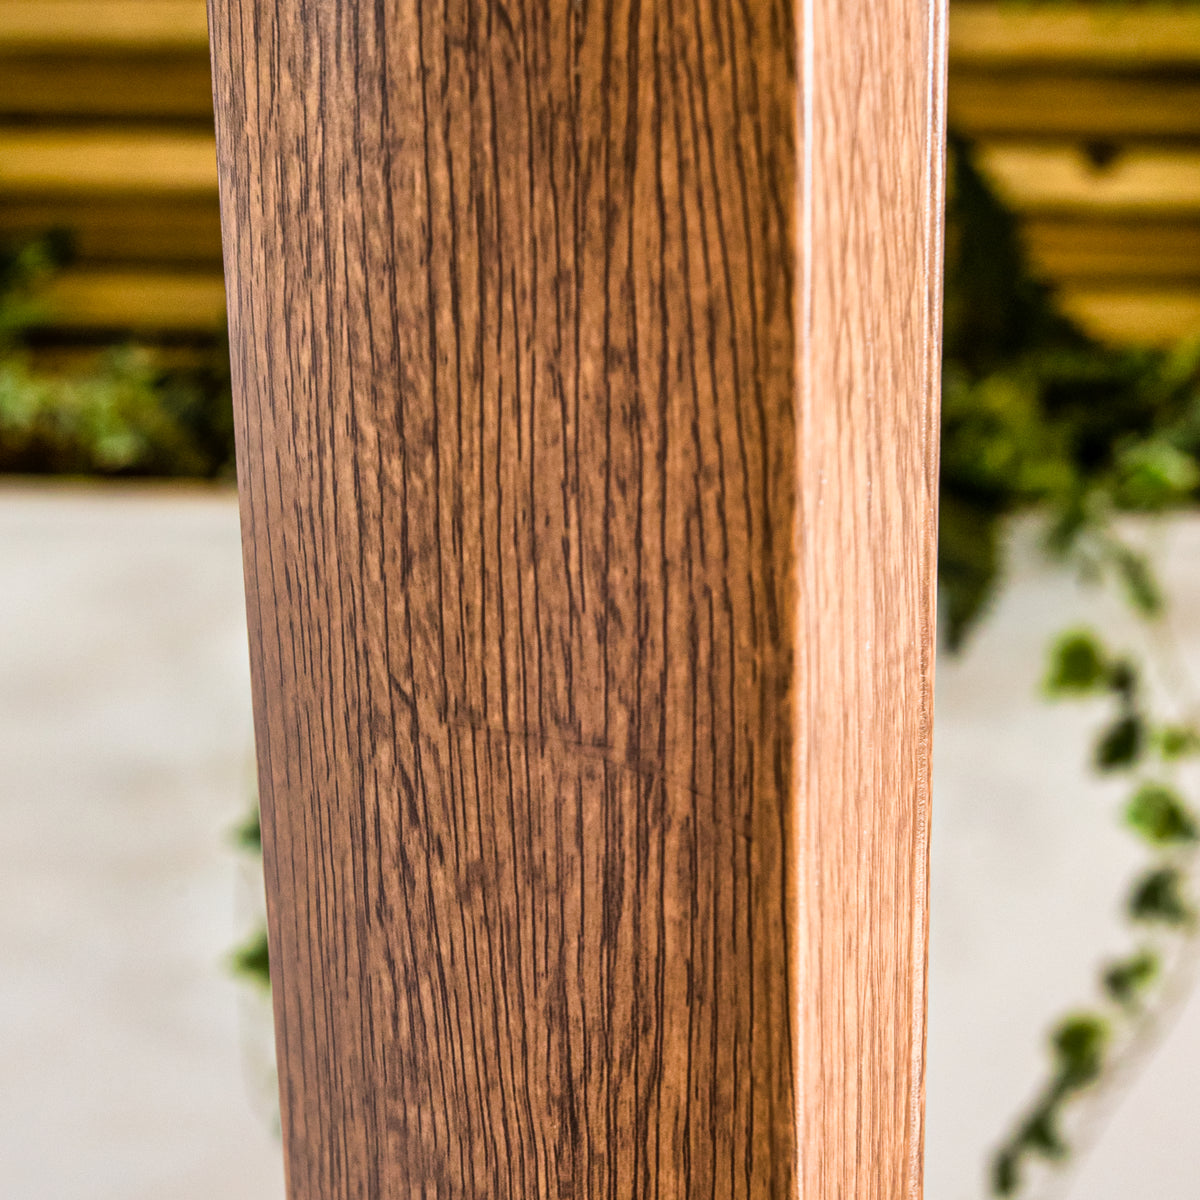 Bracken Outdoors Verona Grey 3m x 3m Square Wood Effect Cantilever Parasol